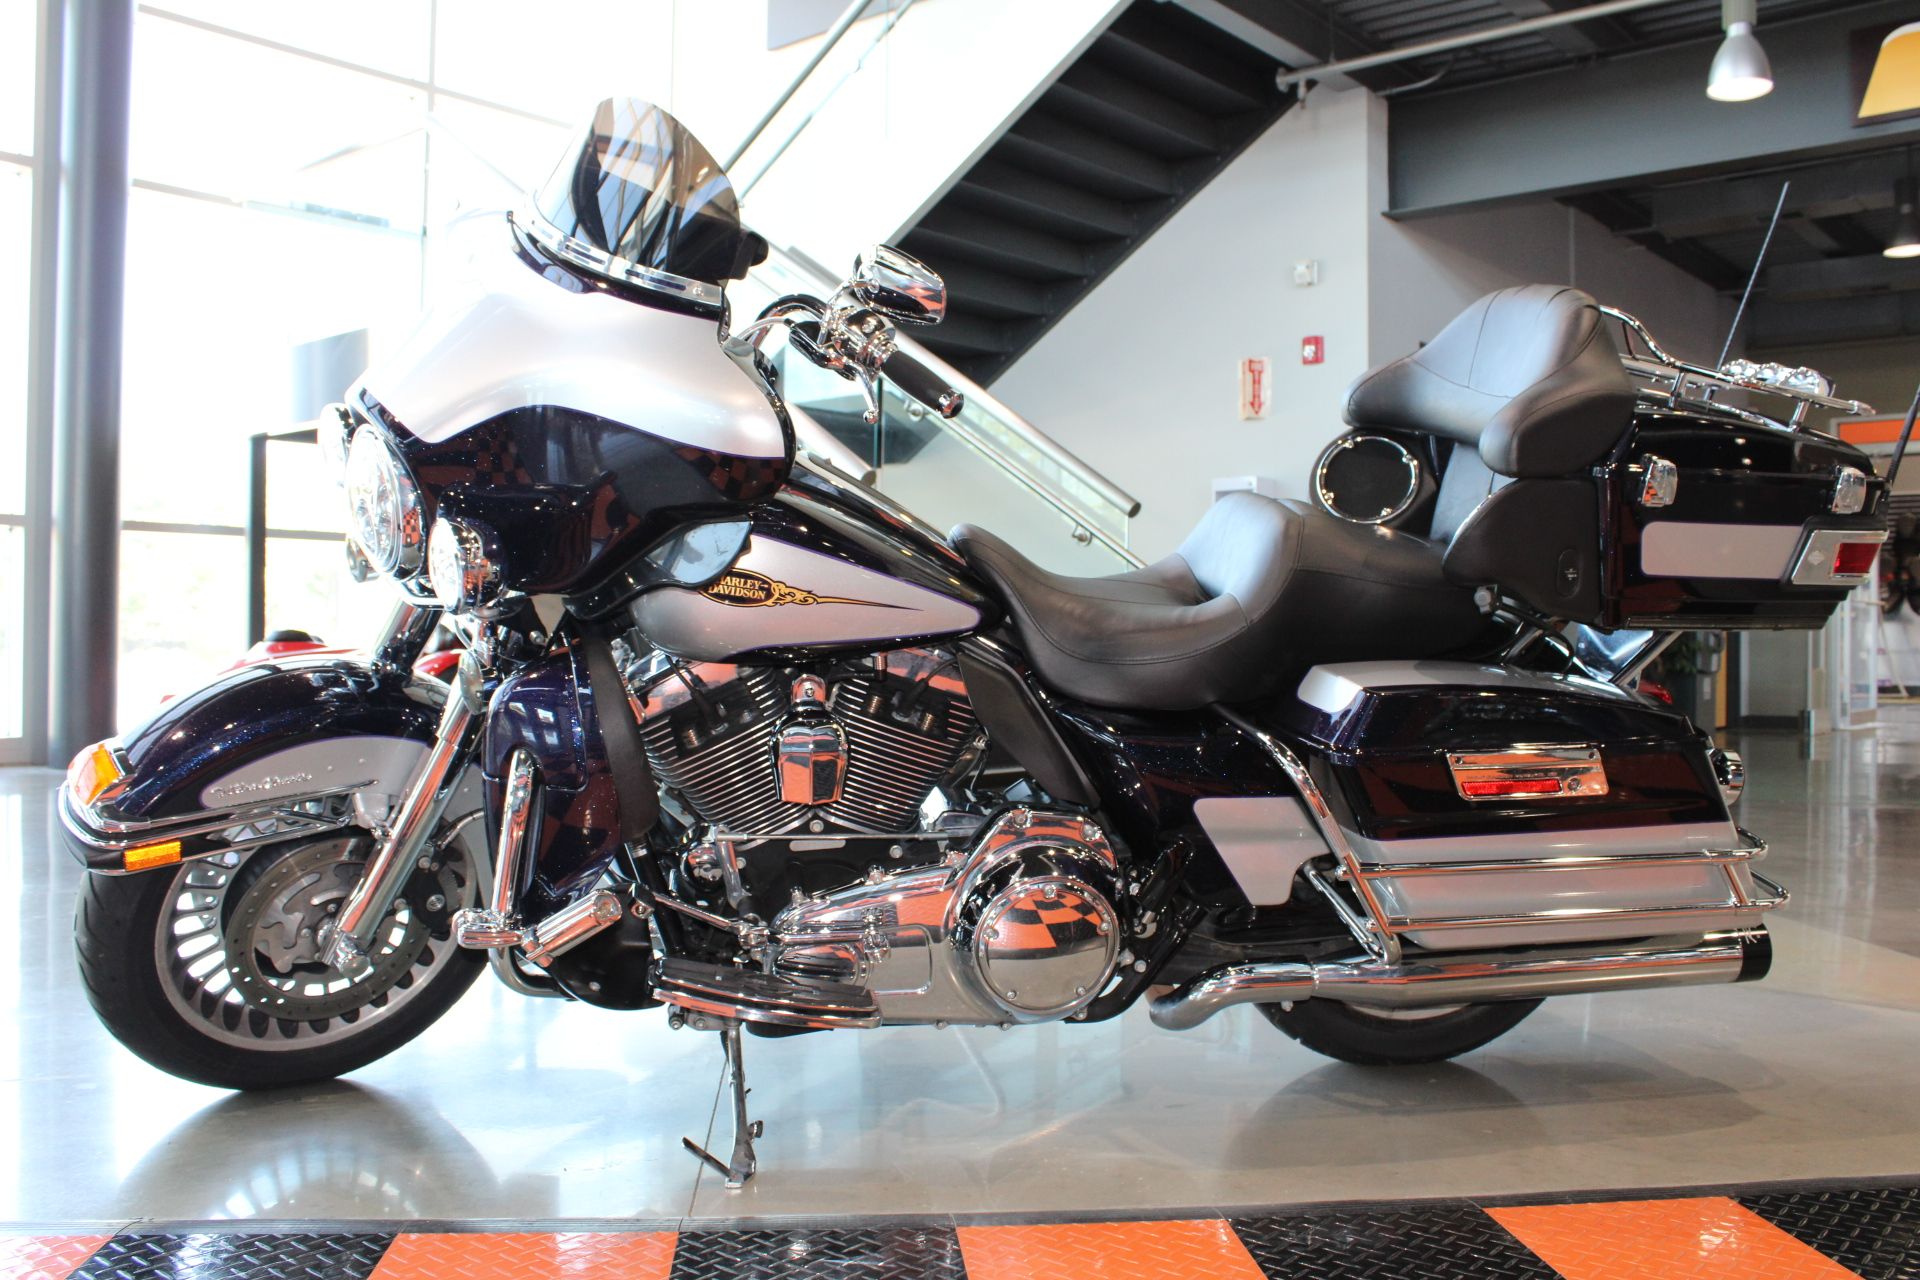 2009 Harley-Davidson Ultra Classic® Electra Glide® in Shorewood, Illinois - Photo 22